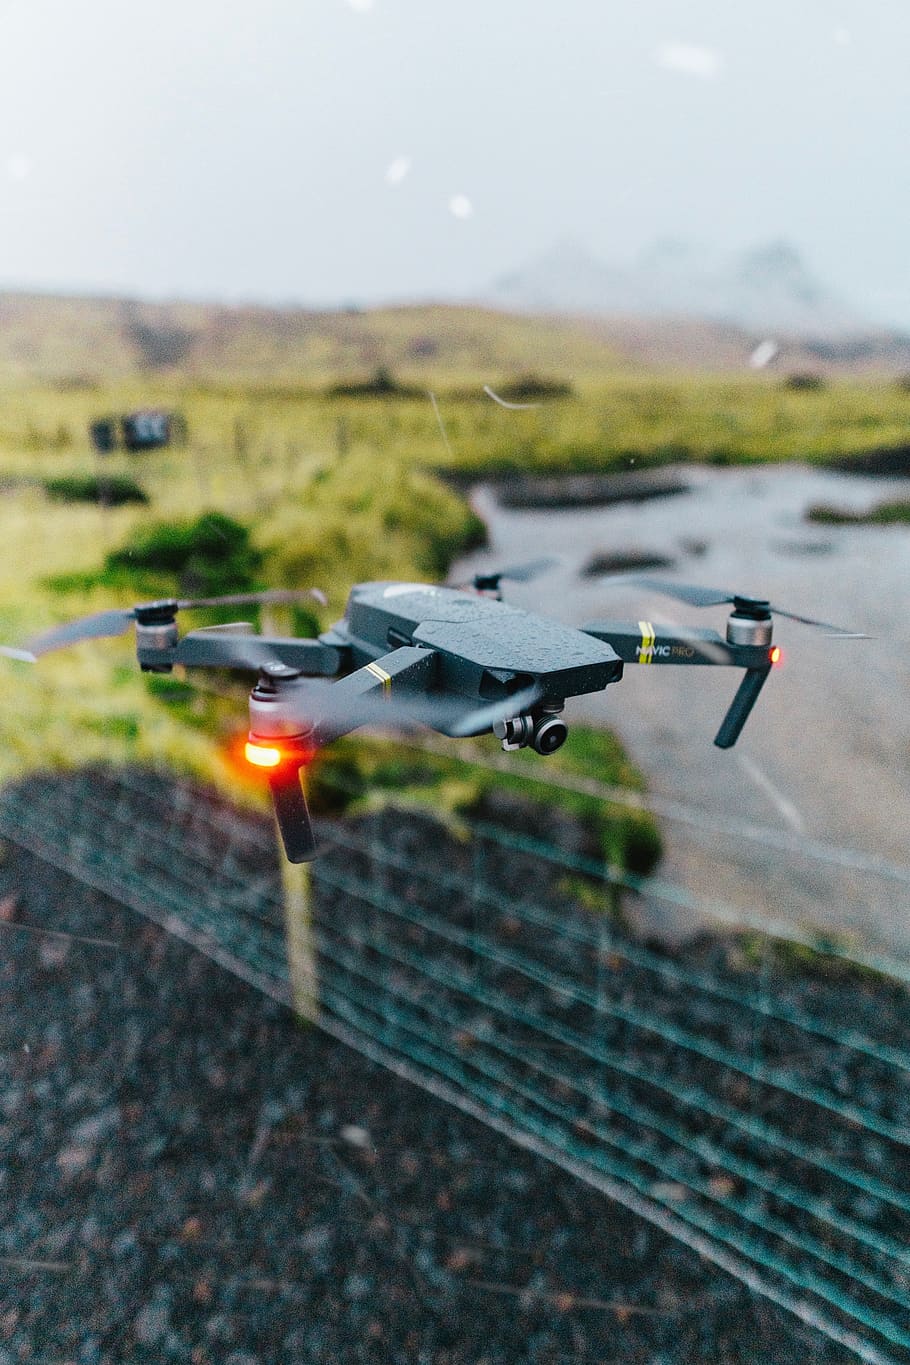 gray drone on flight, aircraft, warplane, airplane, vehicle, transportation